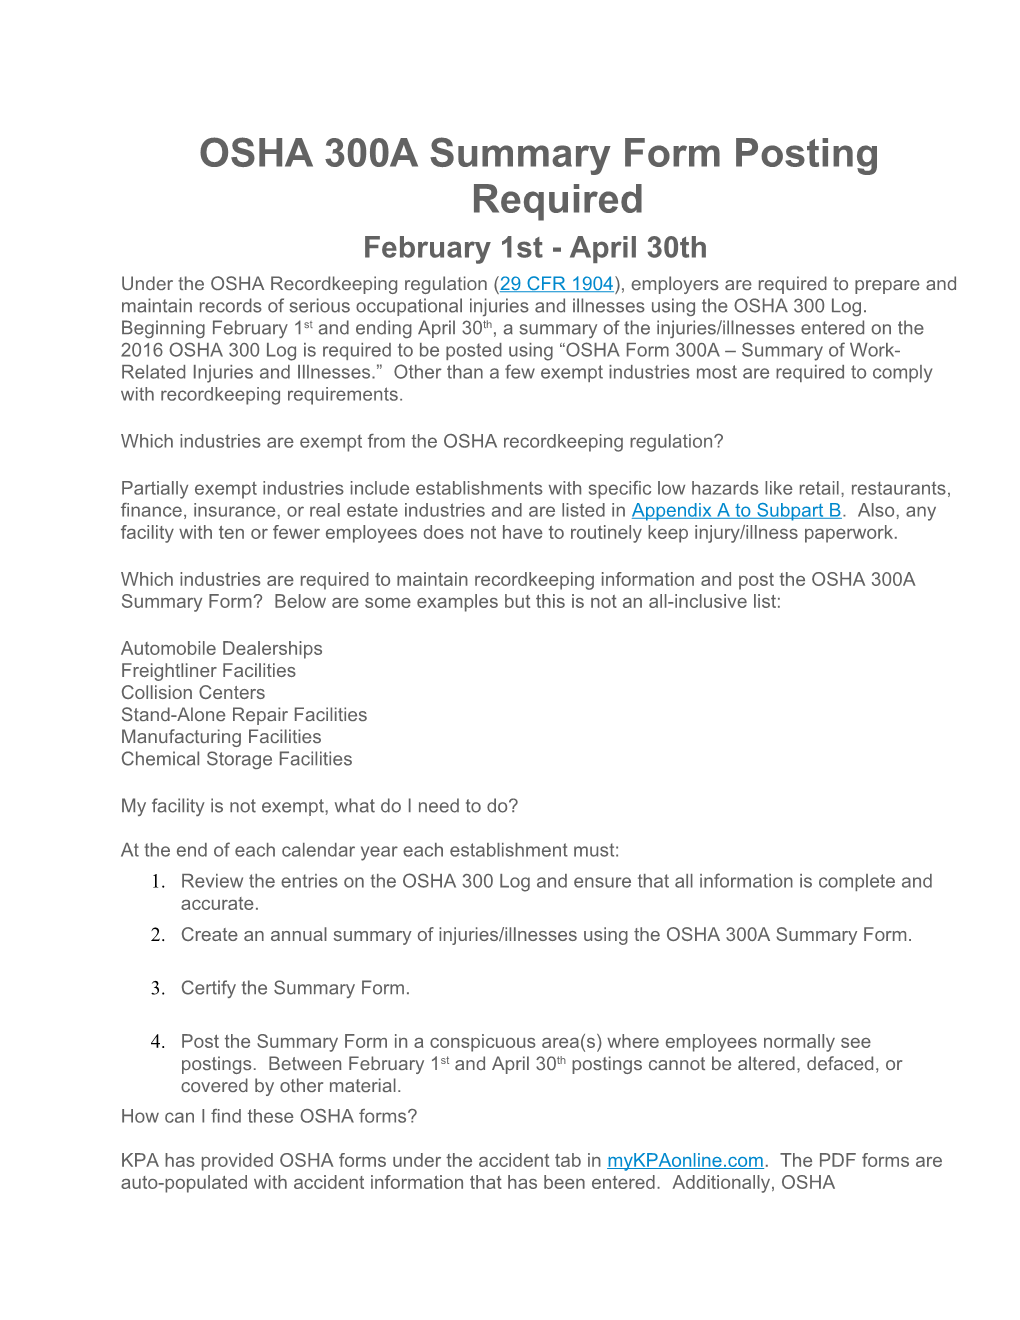 OSHA 300A Summary Form Posting Required